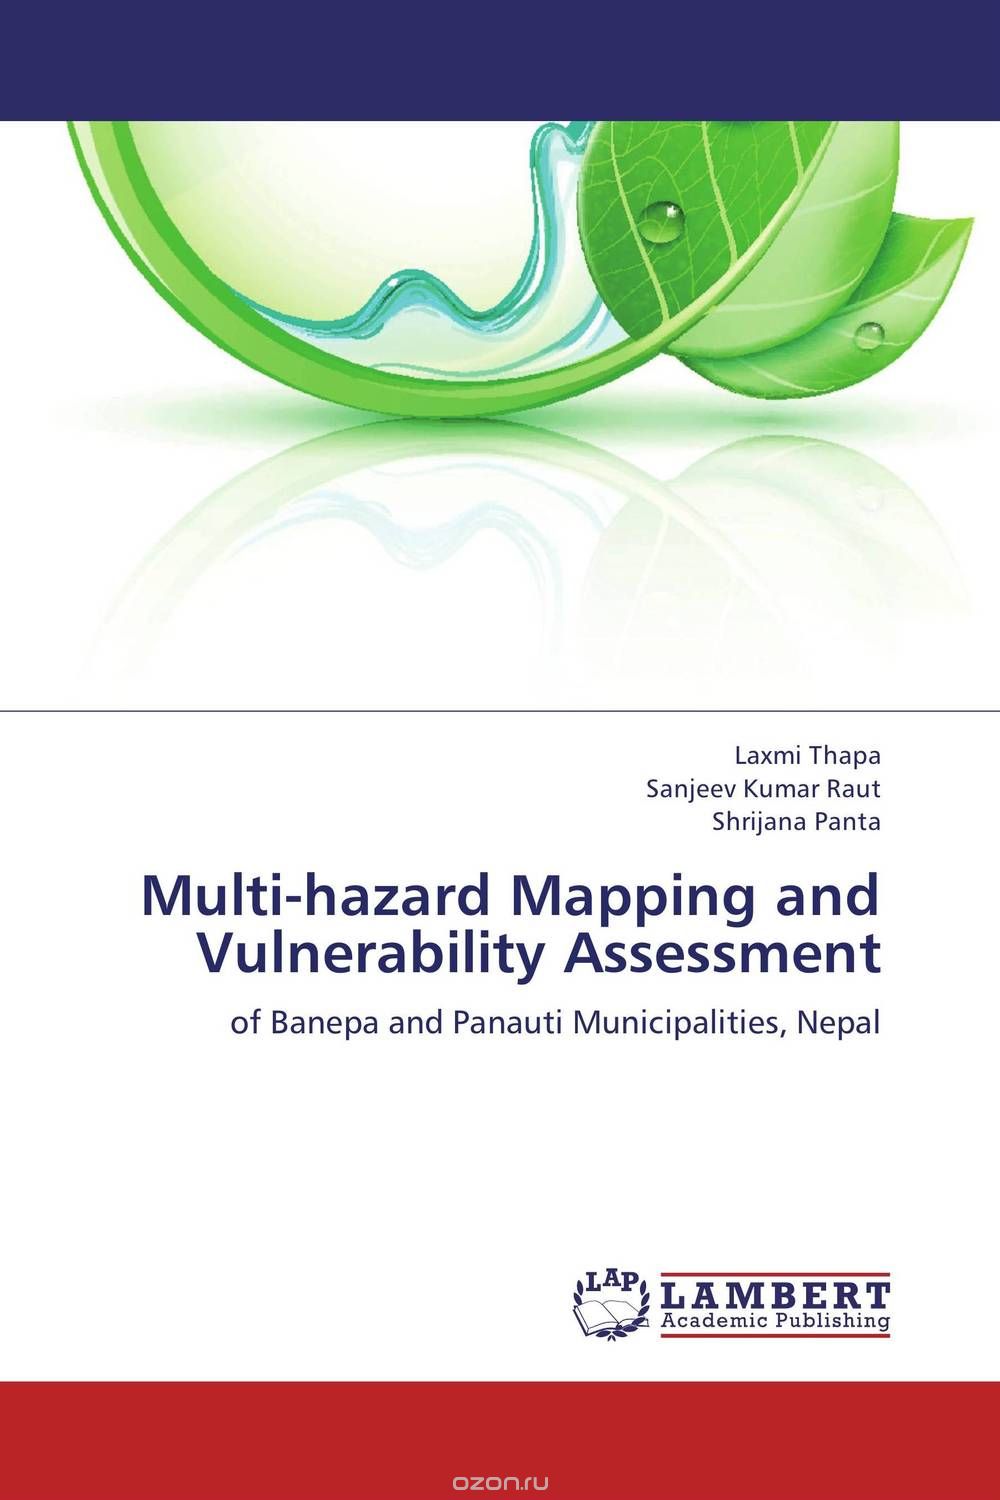 Скачать книгу "Multi-hazard Mapping and Vulnerability Assessment"